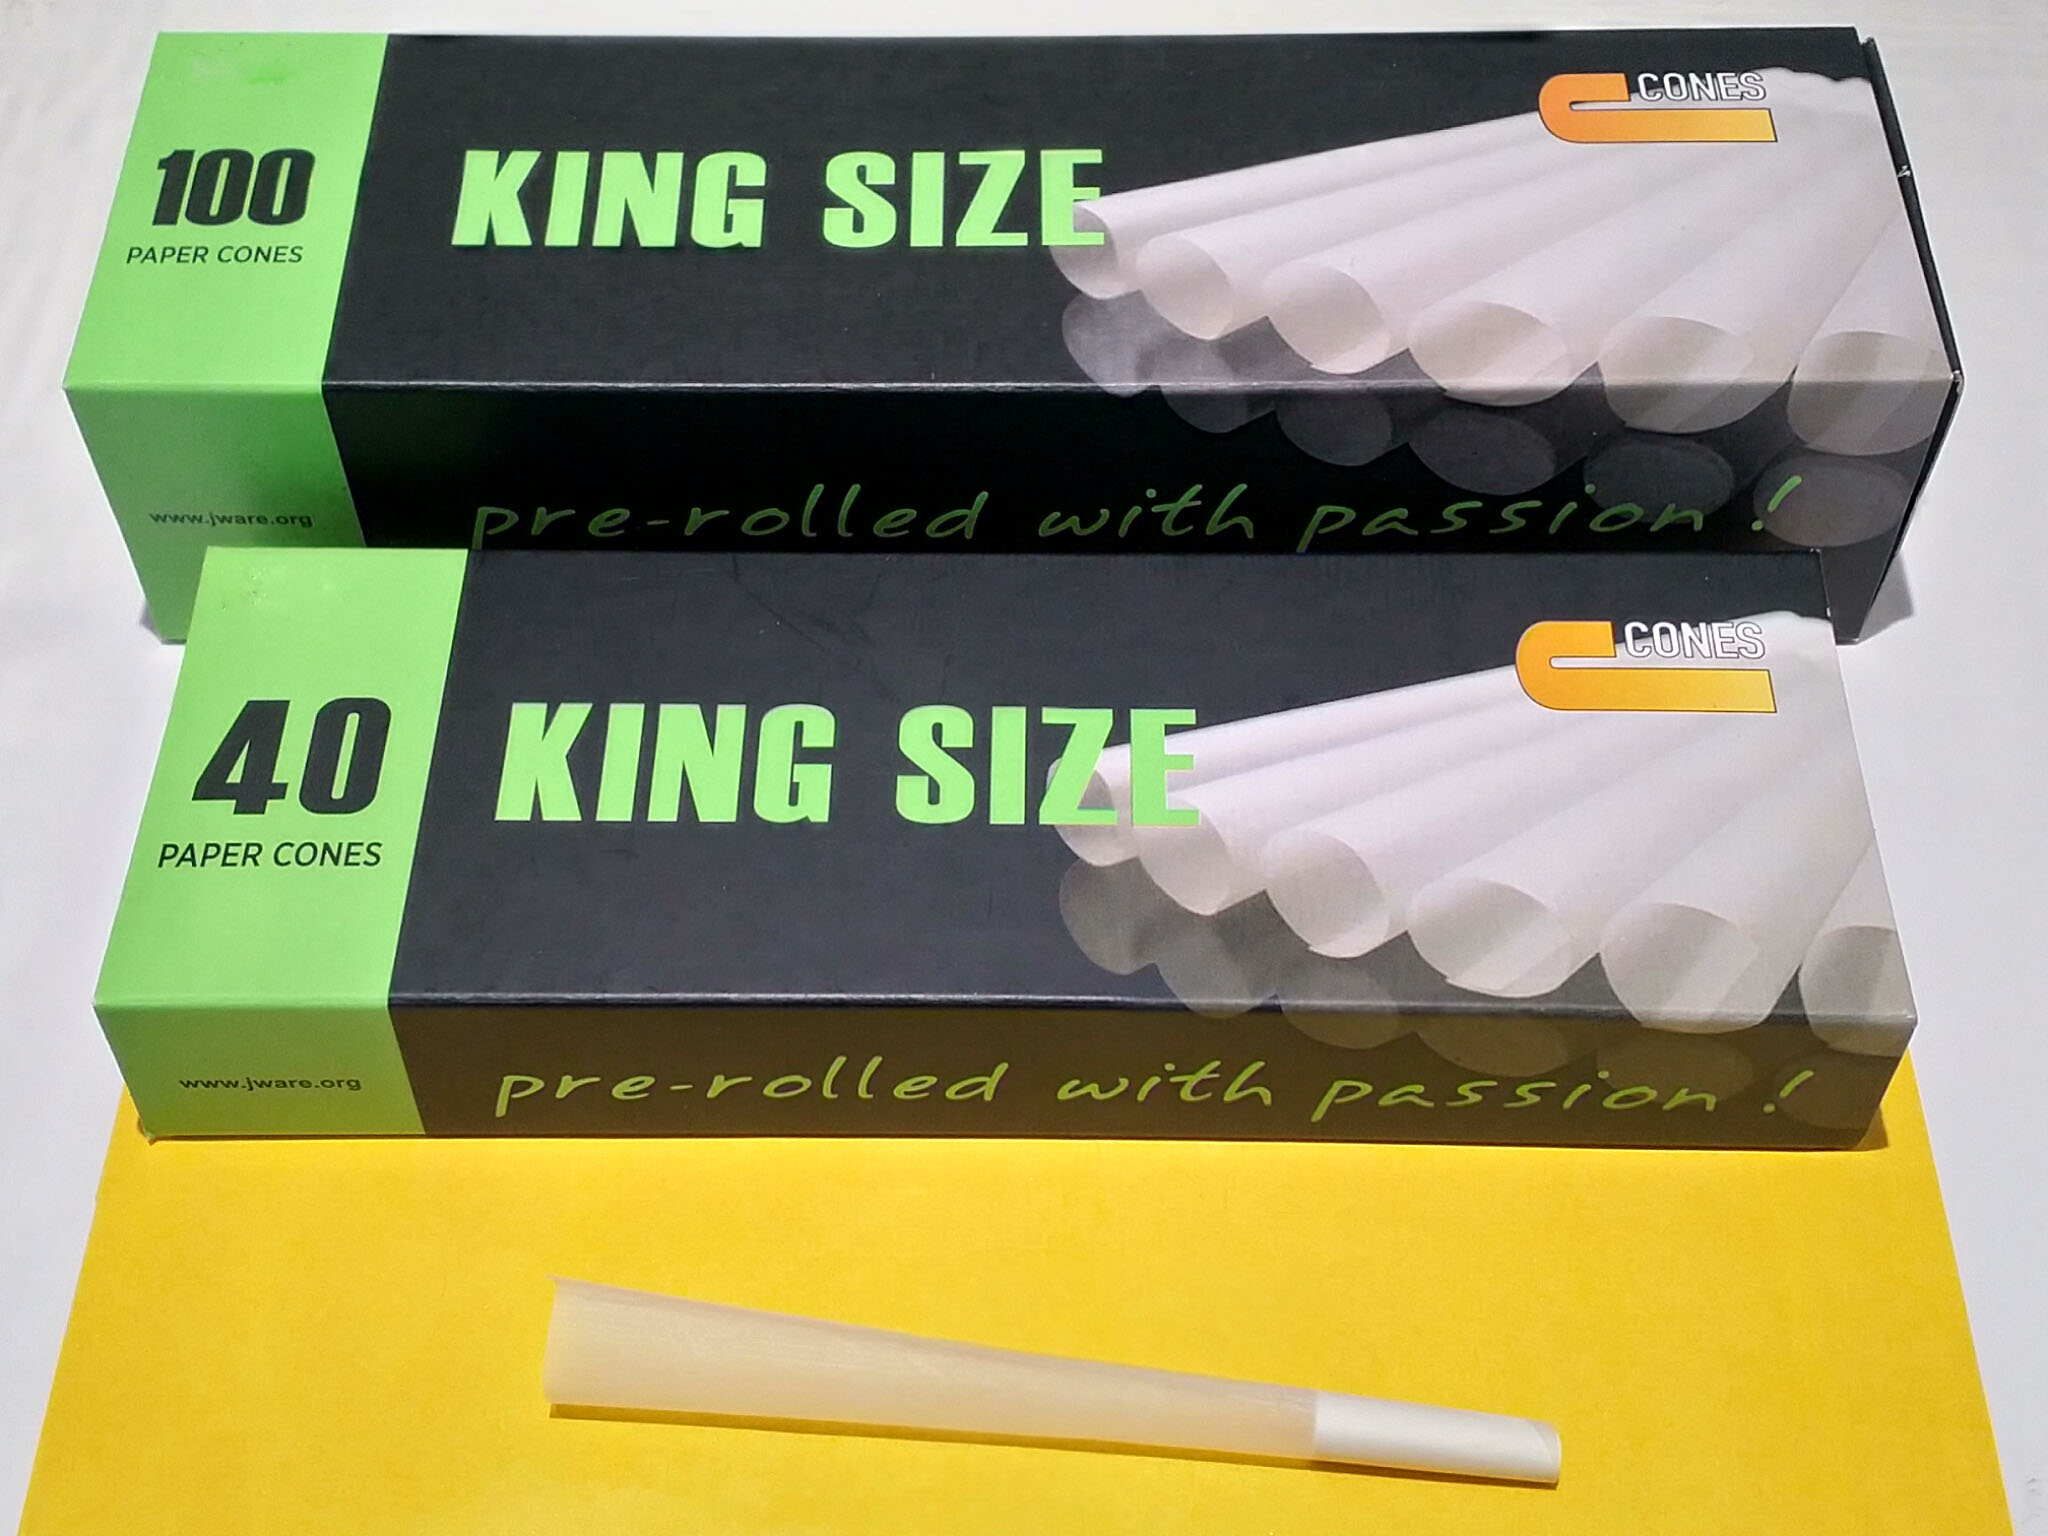 Vorgedrehte Long Papers Jware King Size Cones Hülsen gedrehte KS Papes 12 Stück